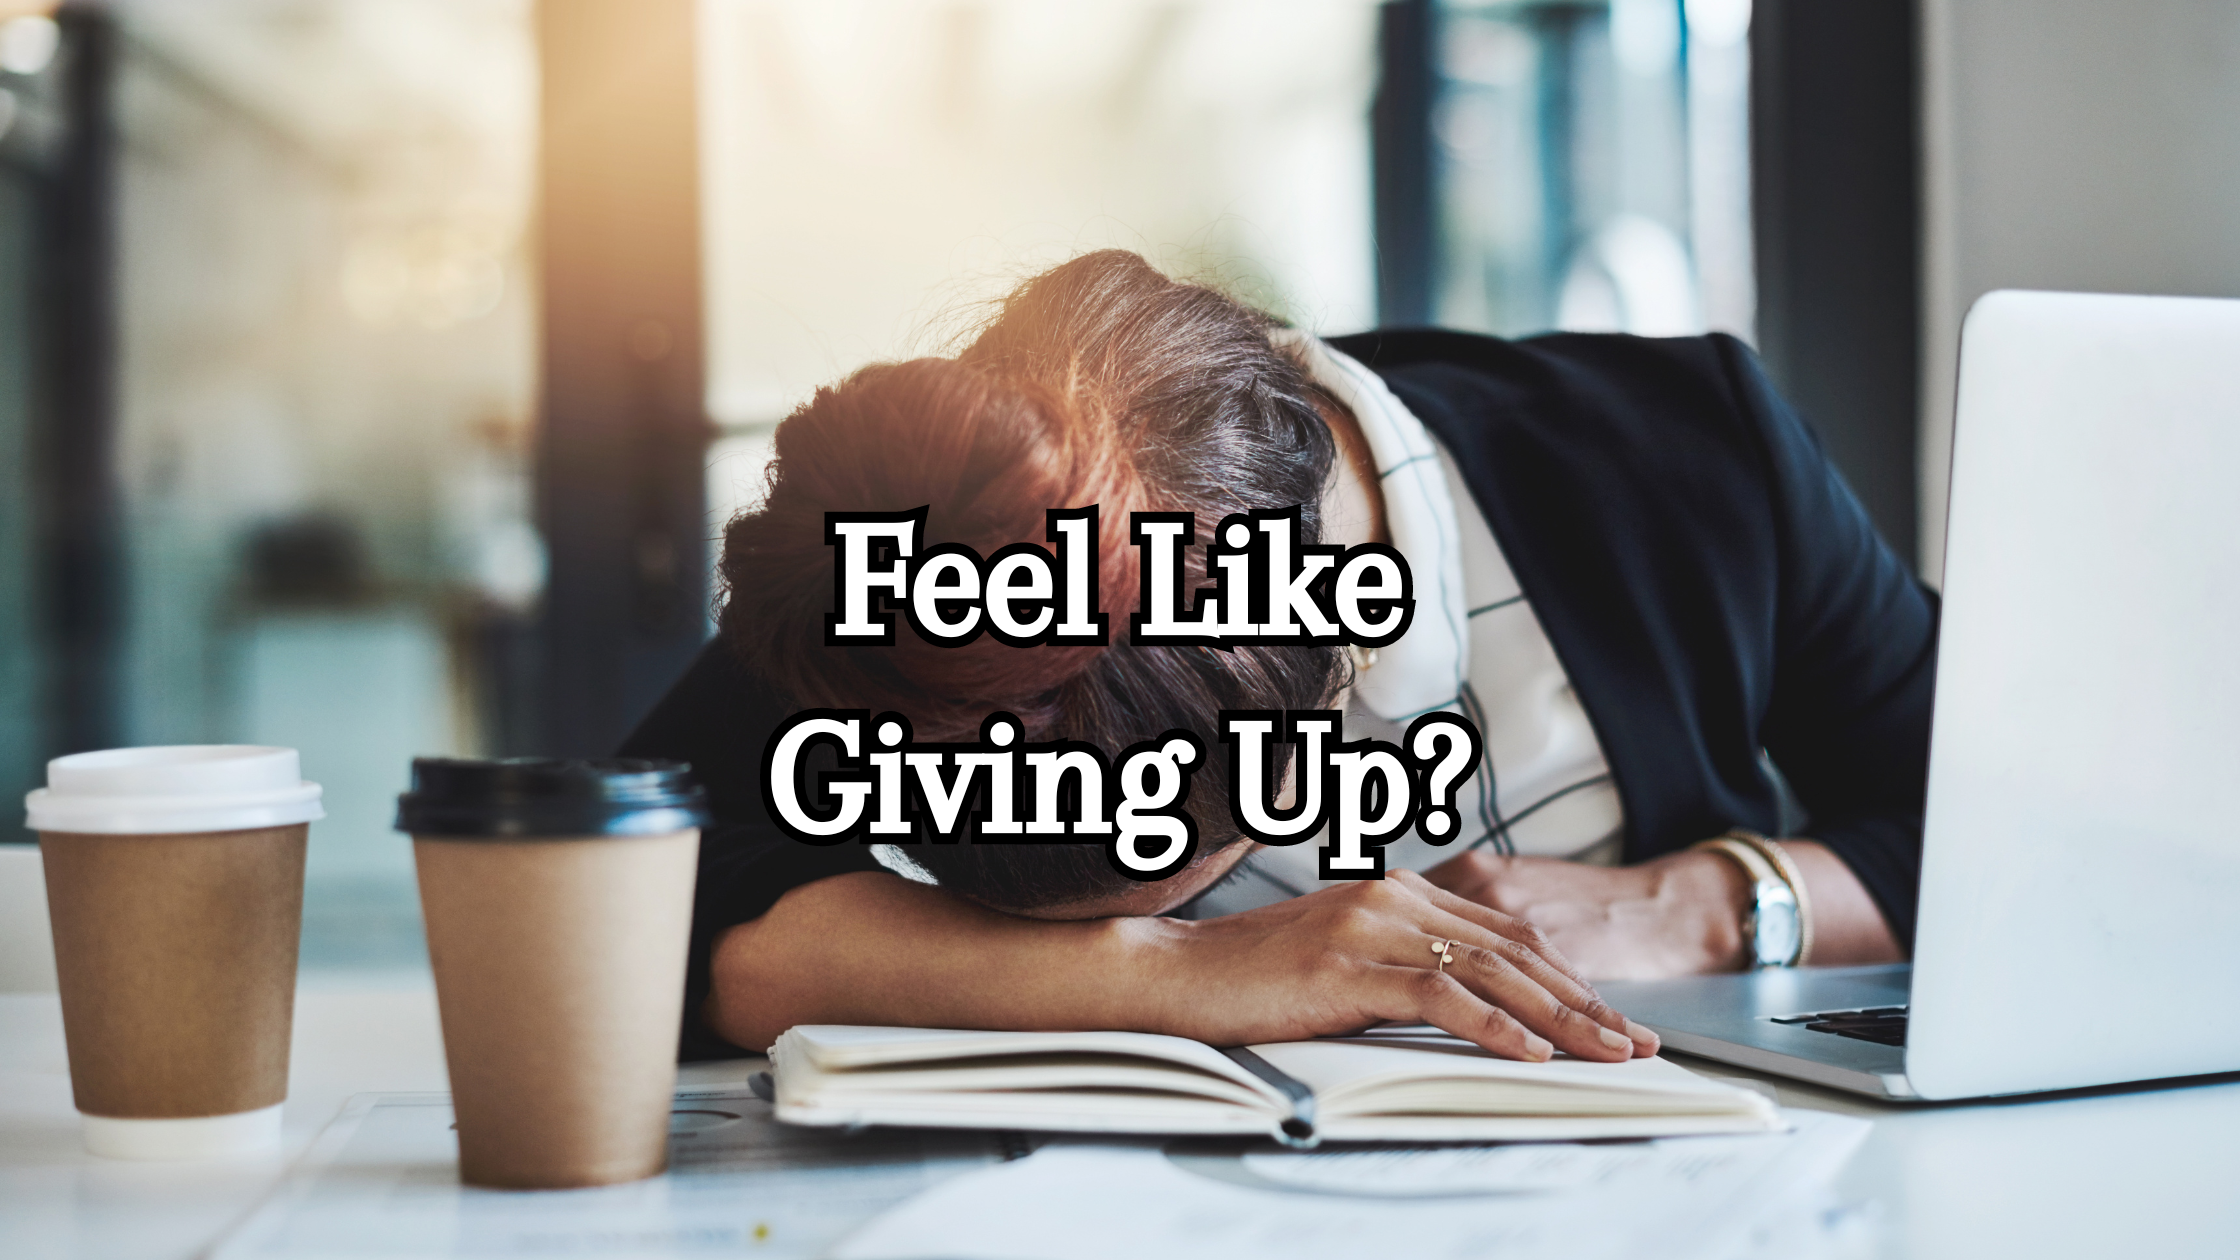 Feel like giving up